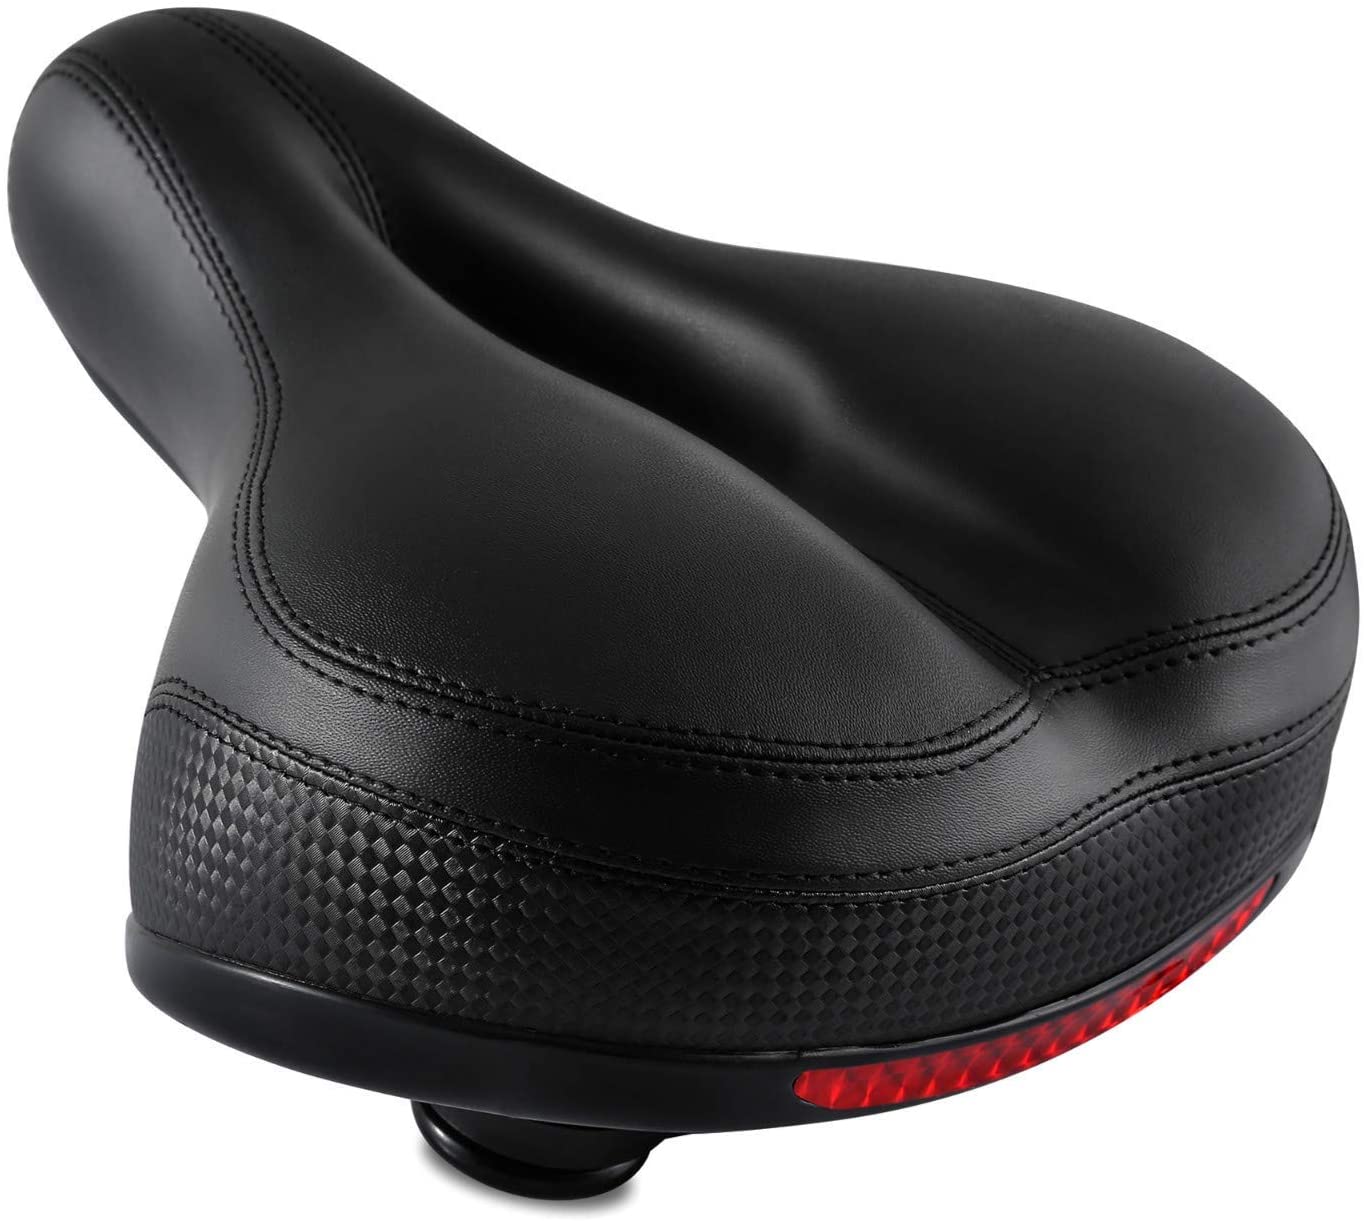 Smabike Comfort Bike Seat for Women or Men, Bicycle Saddle Replacement Padded Soft High Density Memory Foam